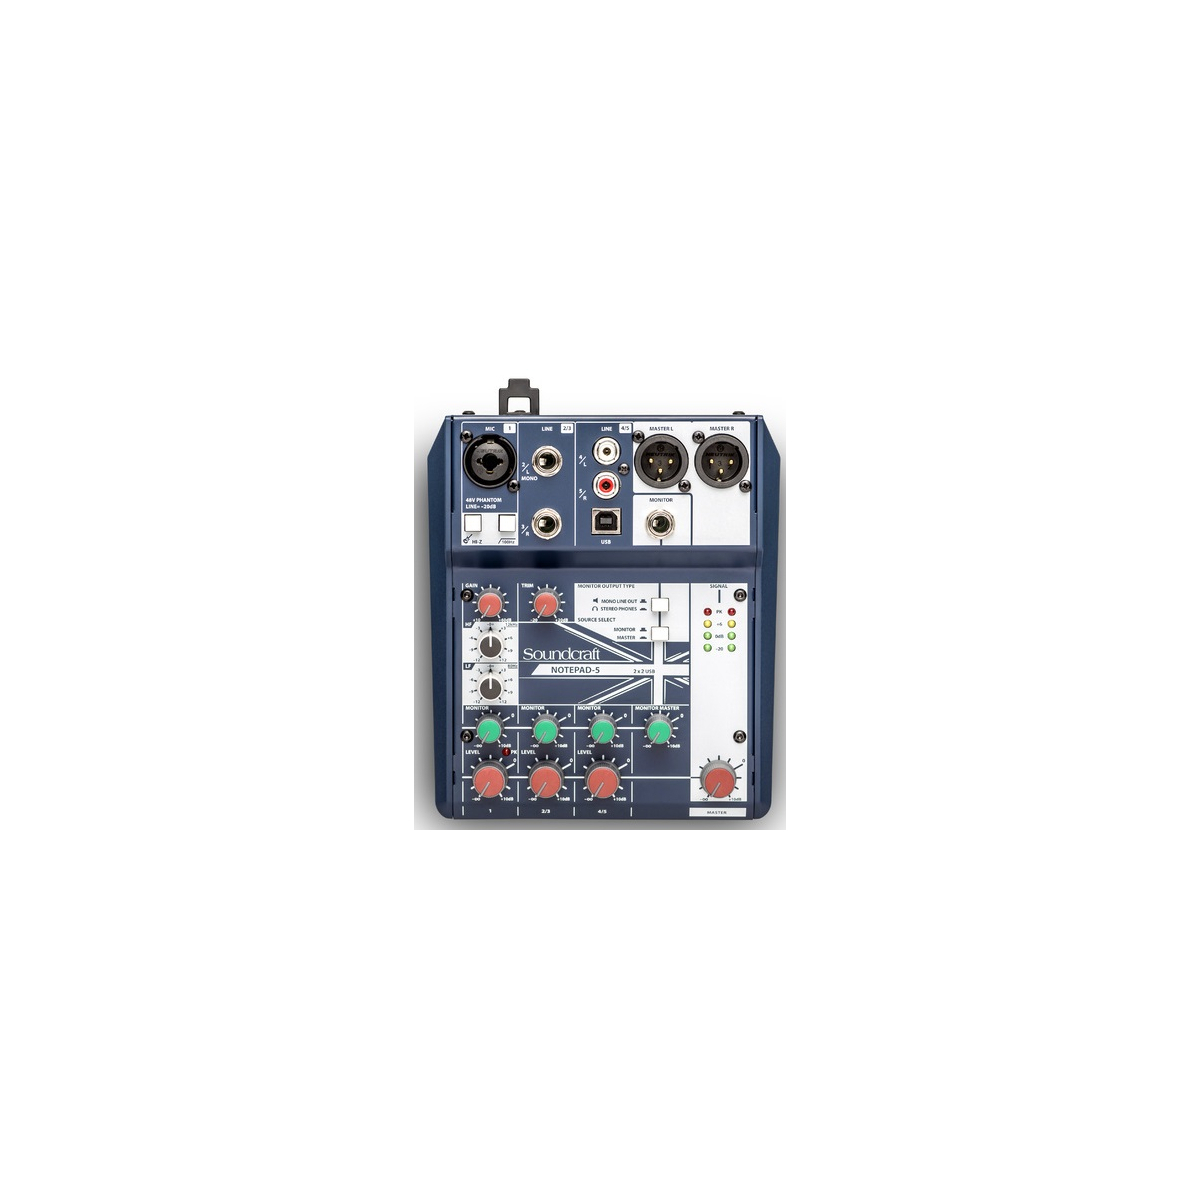 Consoles analogiques - Soundcraft - NotePad-5